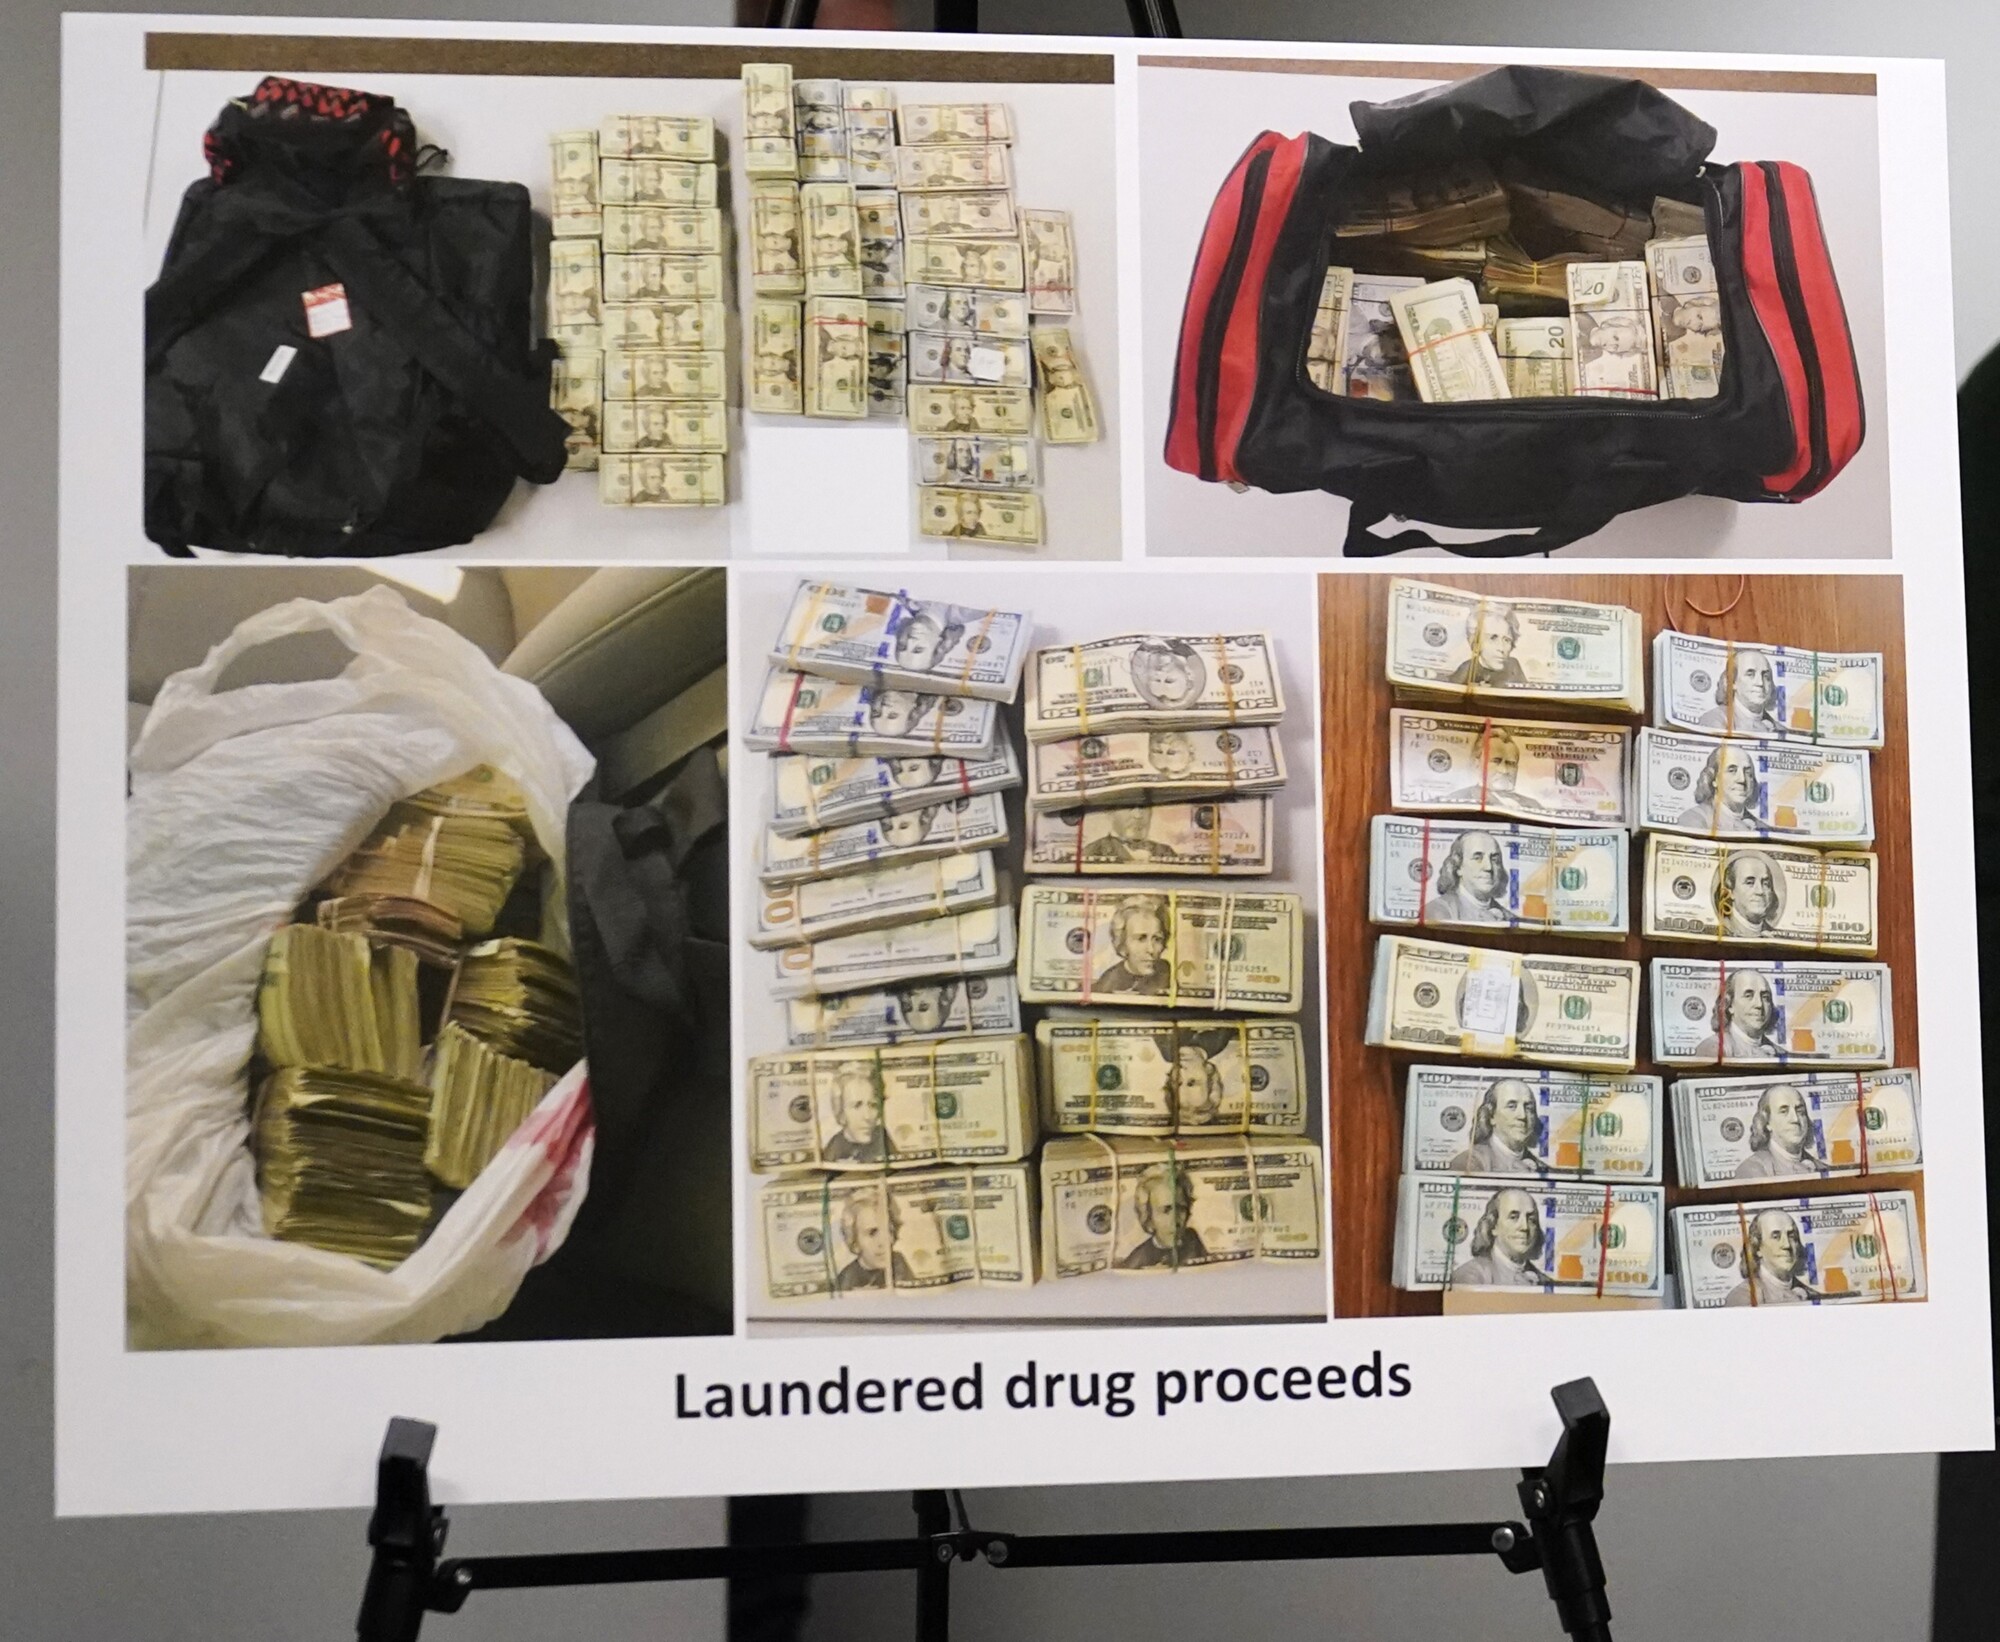 19 Indicted in International Drug Money Laundering Scheme